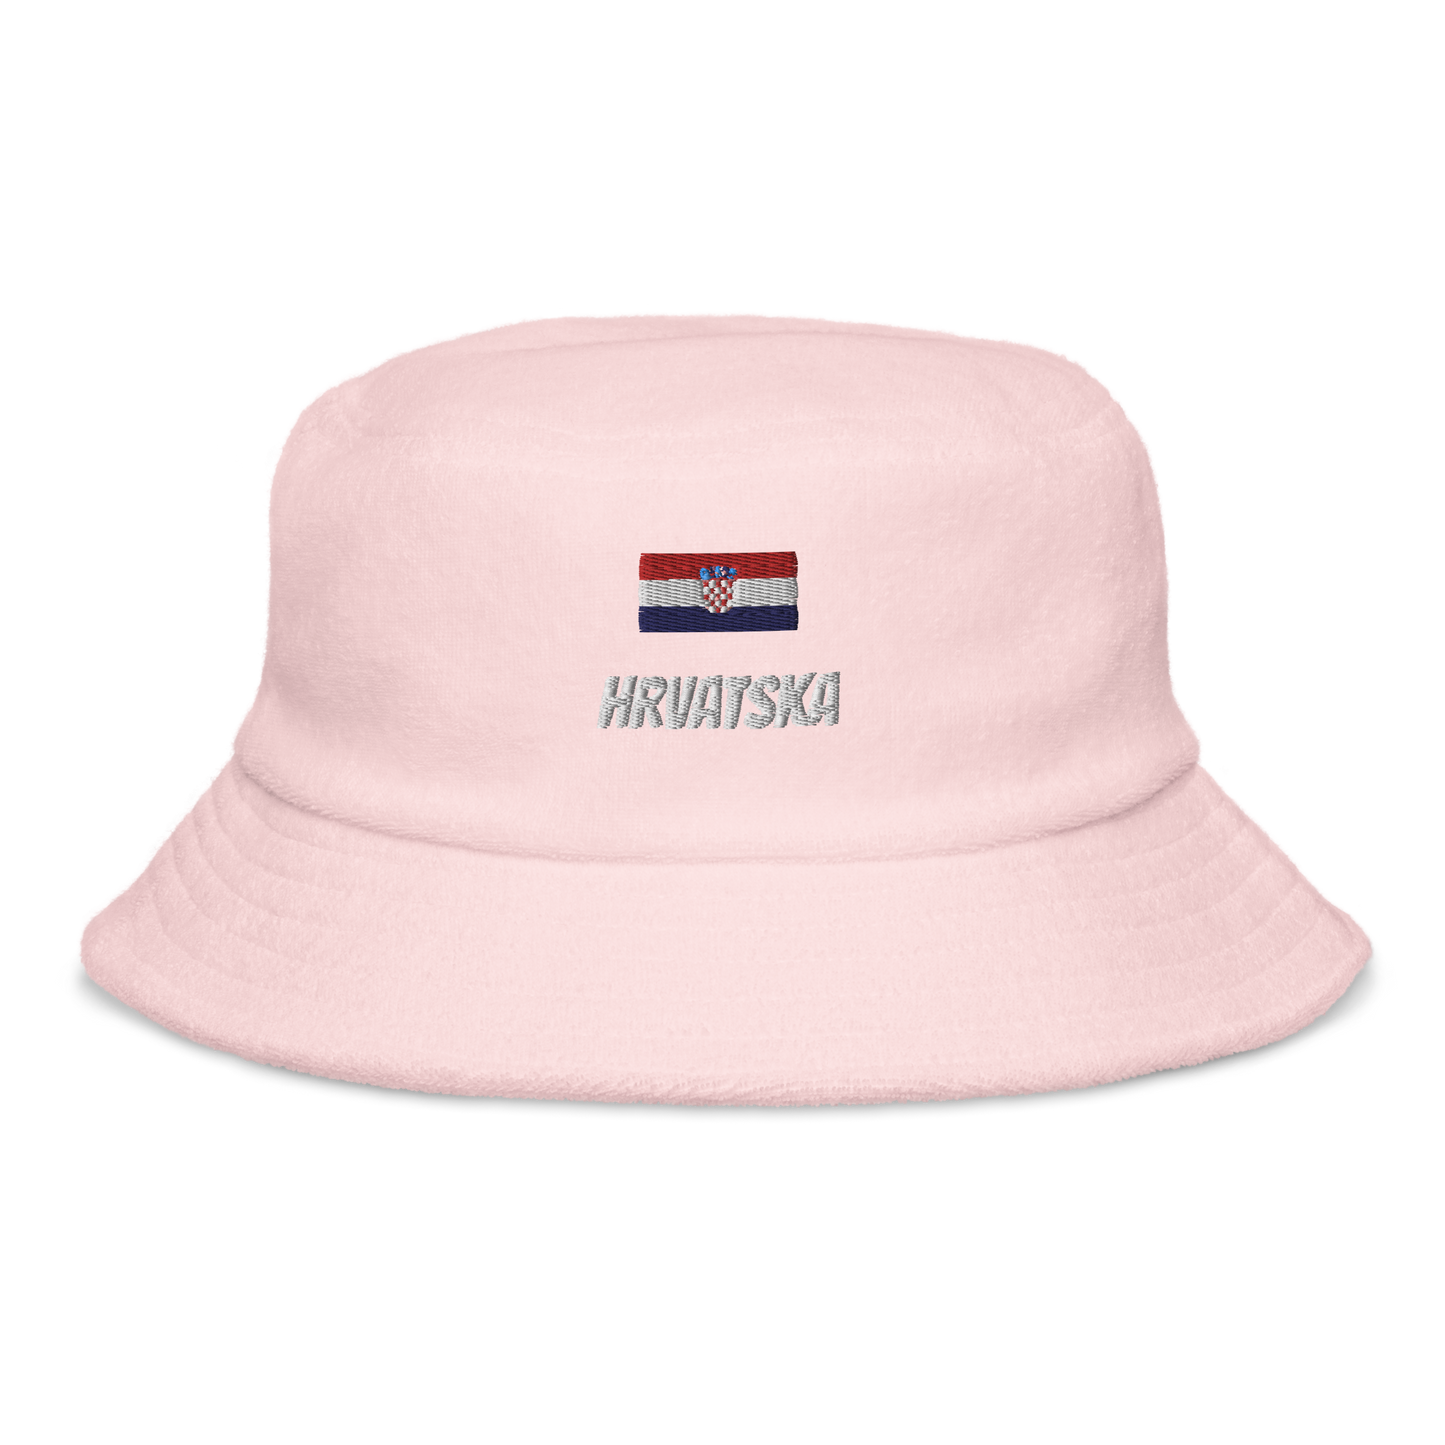 croatian flag and hrvatska terry cloth bucket hat